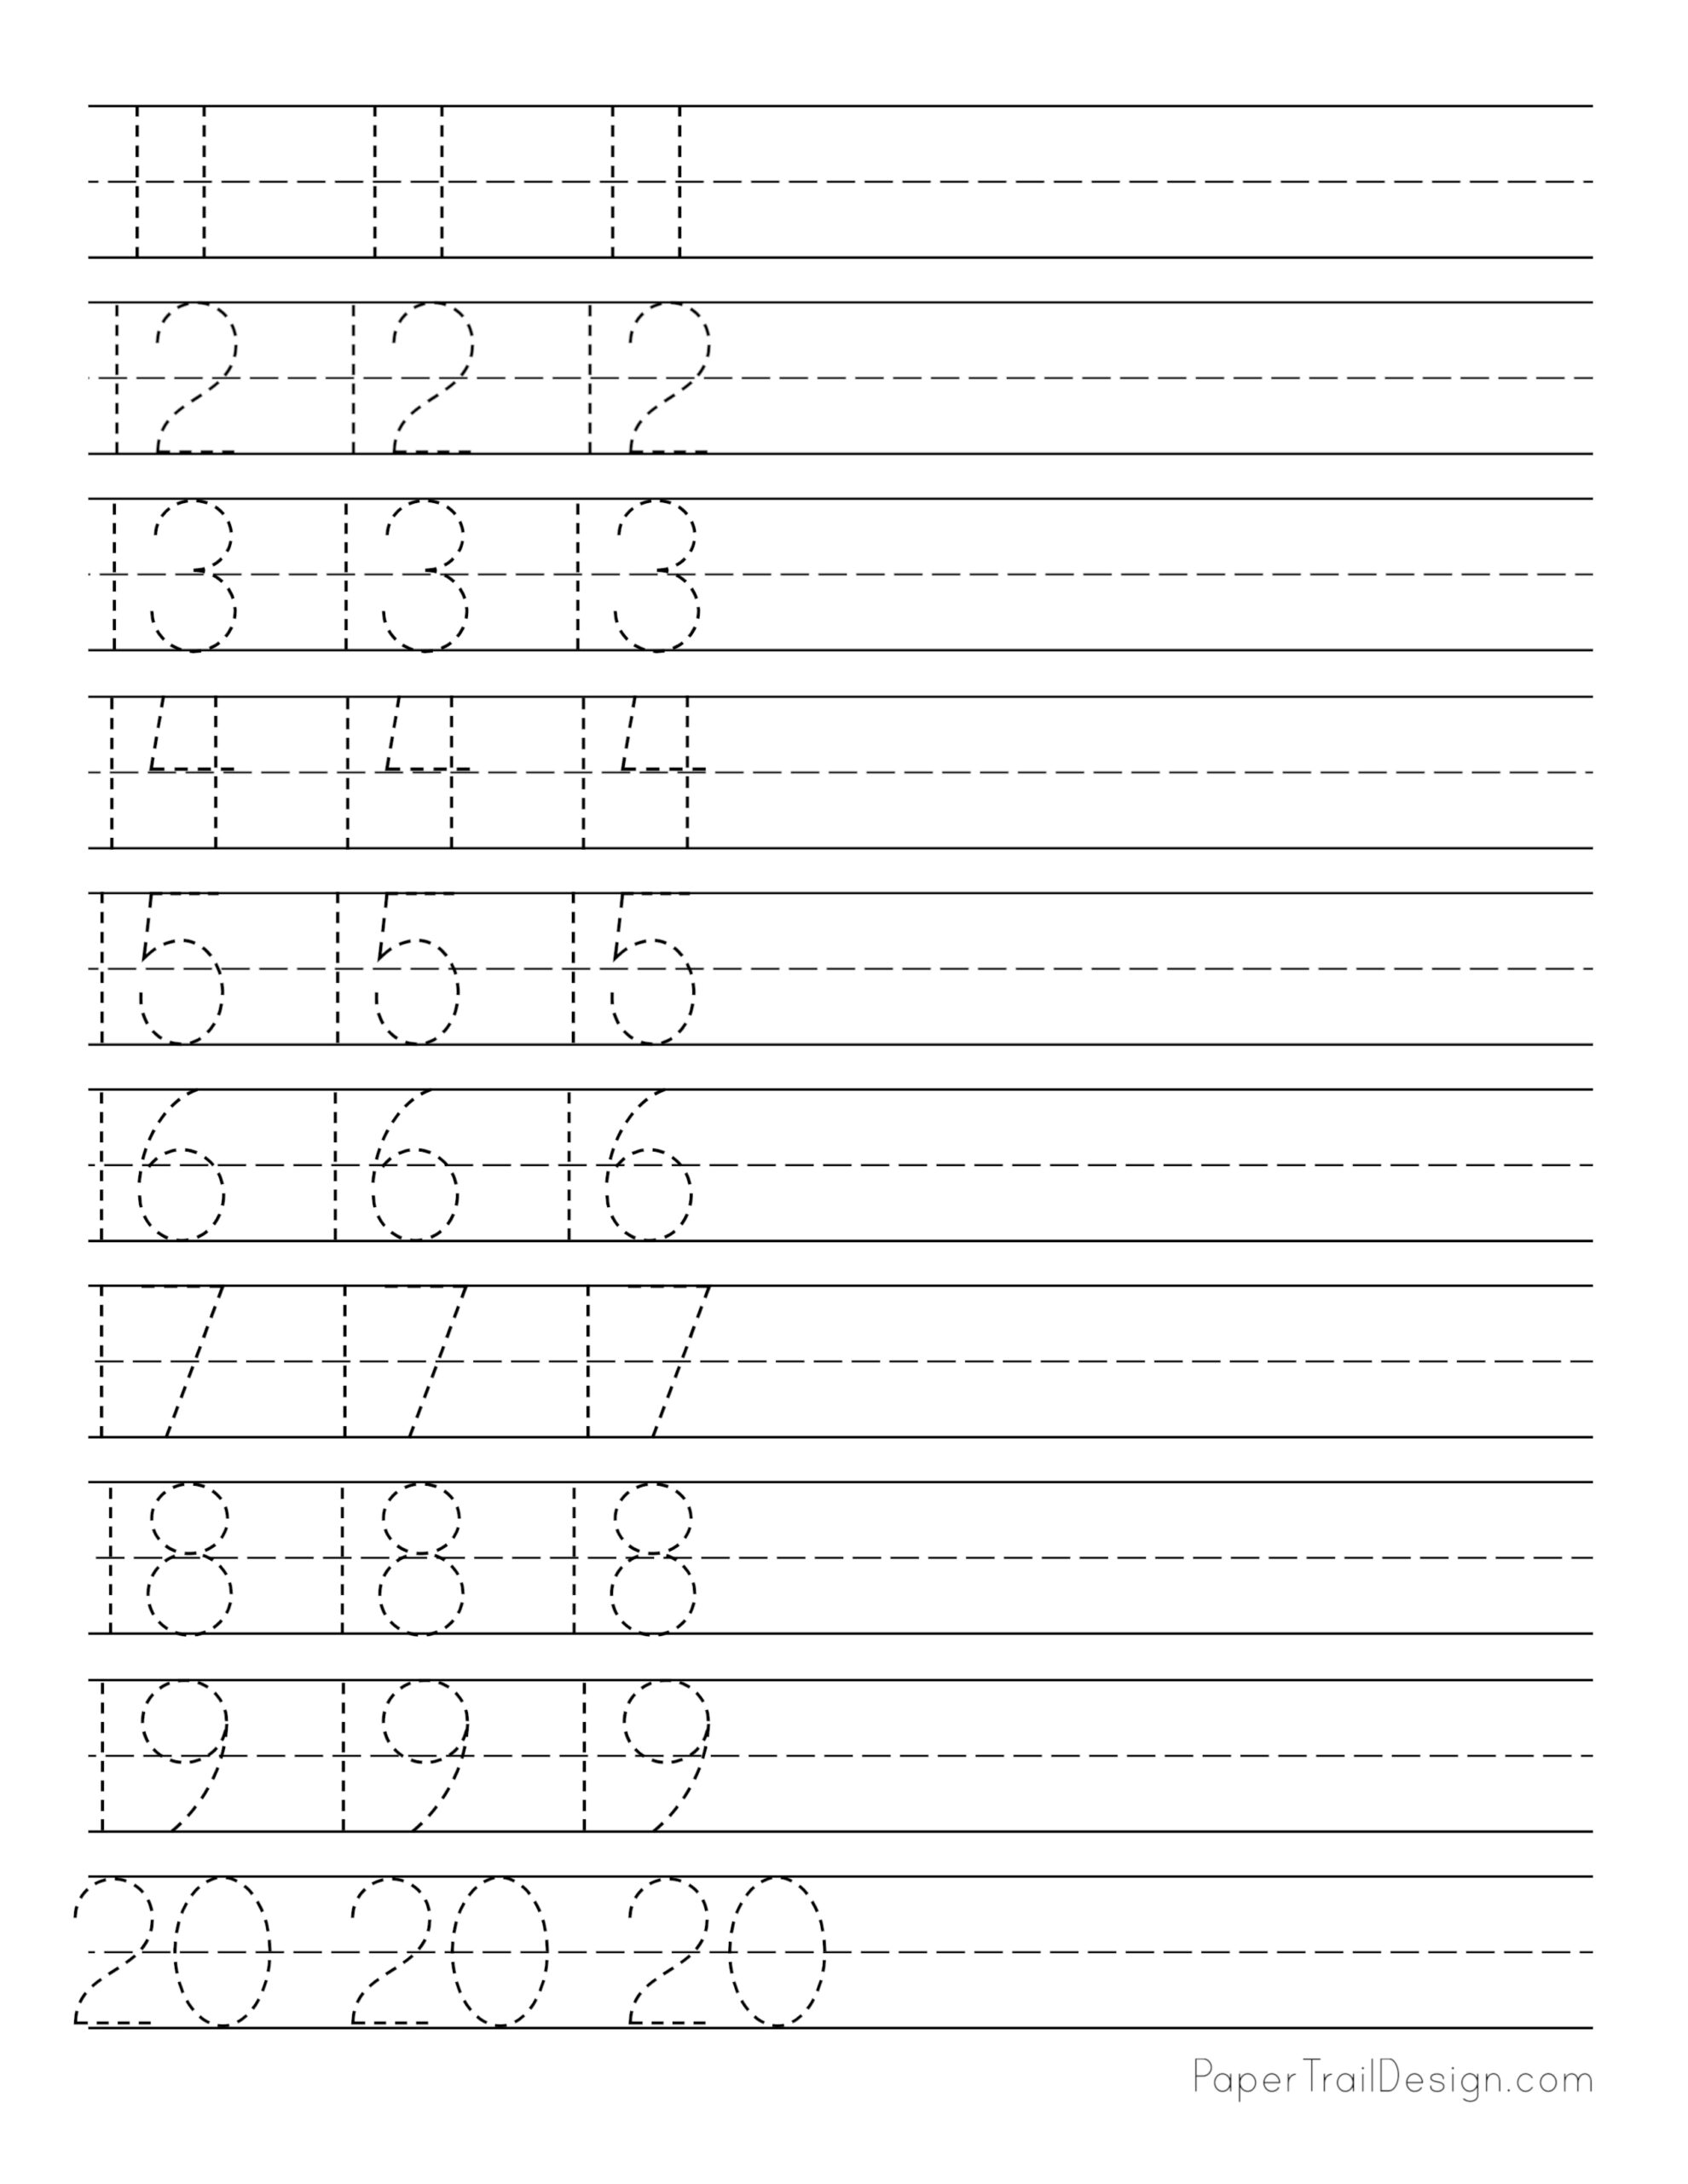 free-printable-worksheets-for-kids-tracing-numbers-1-20-worksheets